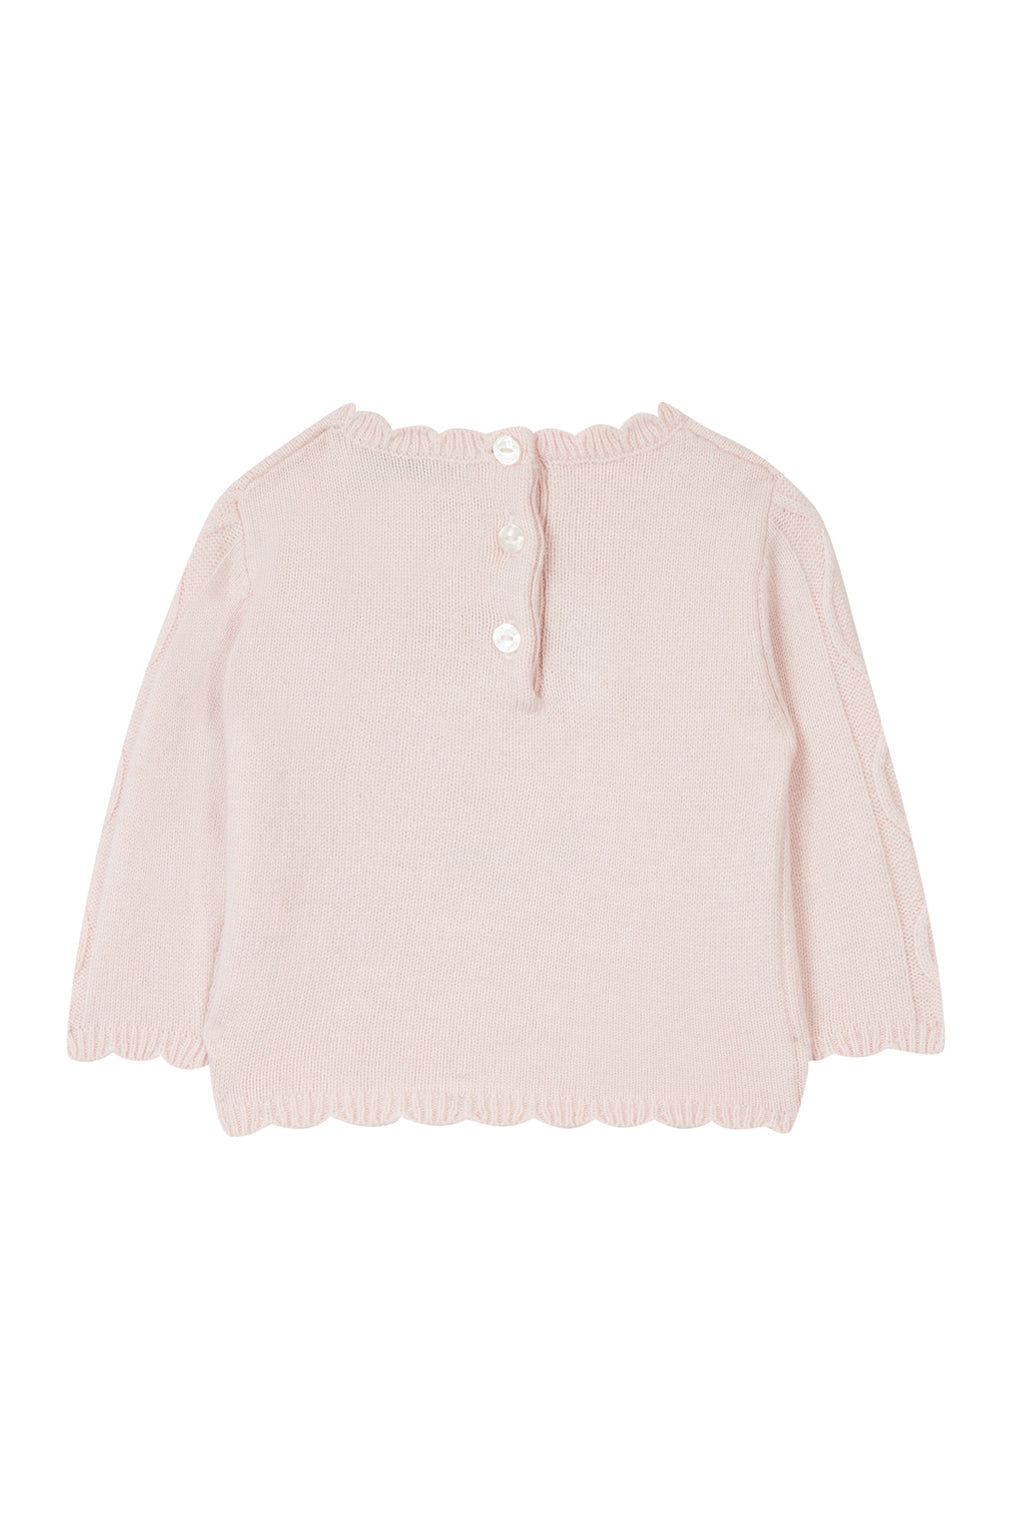 Sweater - Pale pink flowery heart